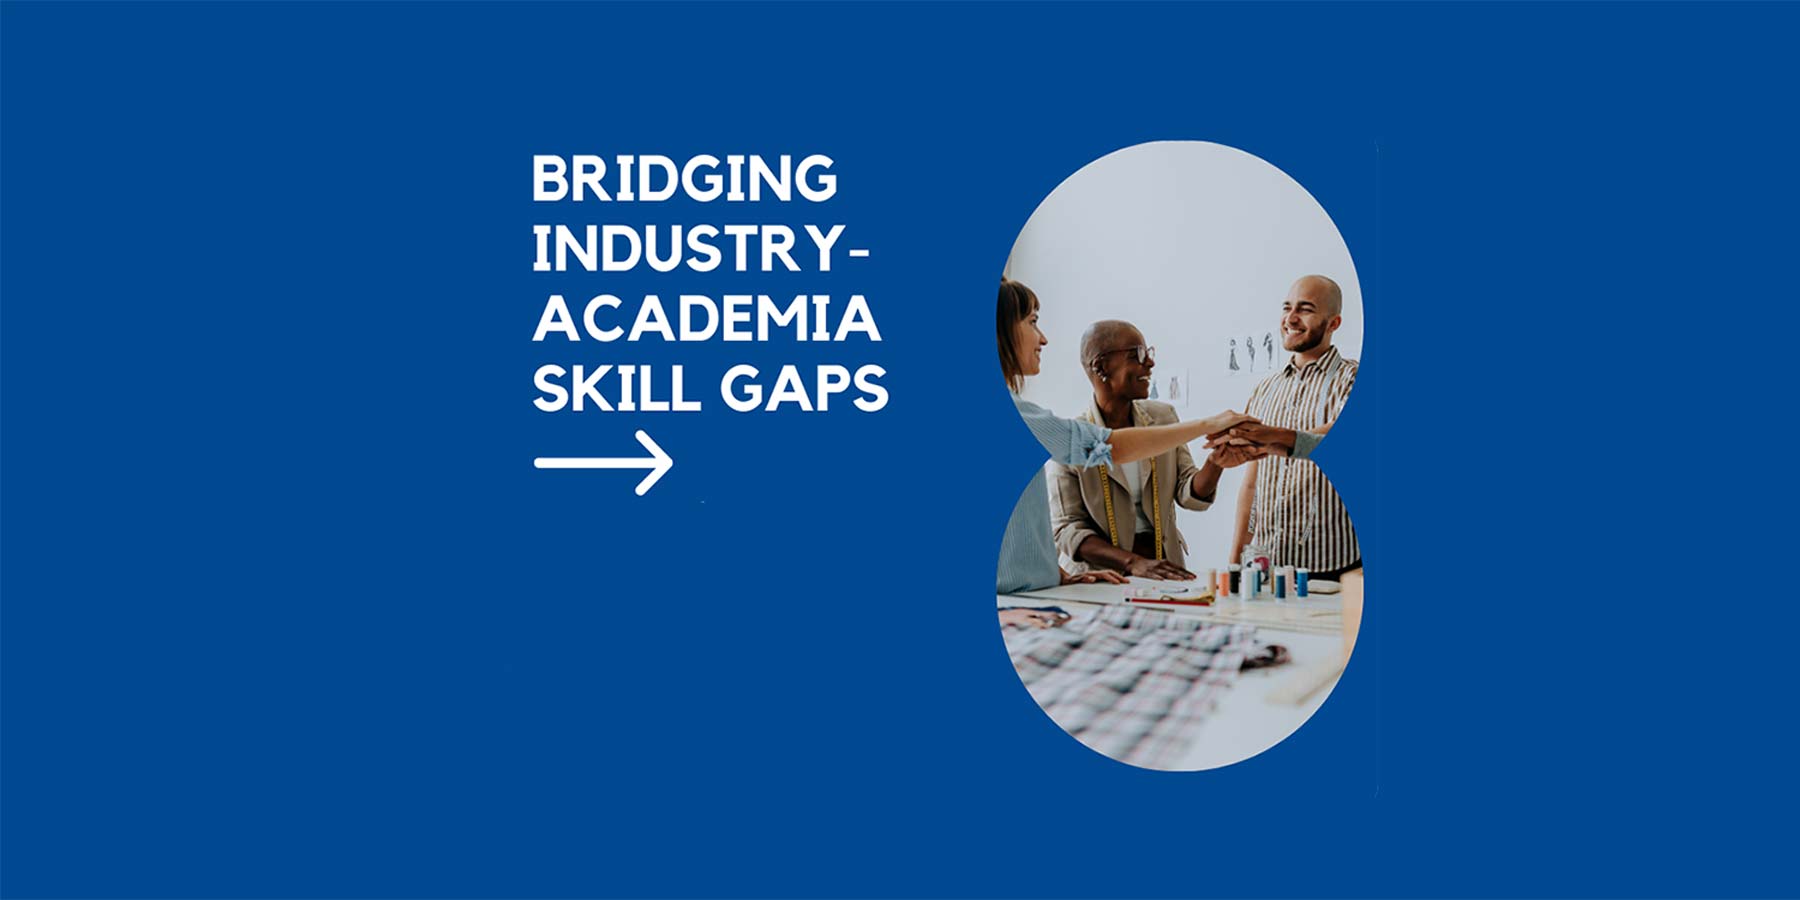 Bridging Industry - Academia Skill Gaps